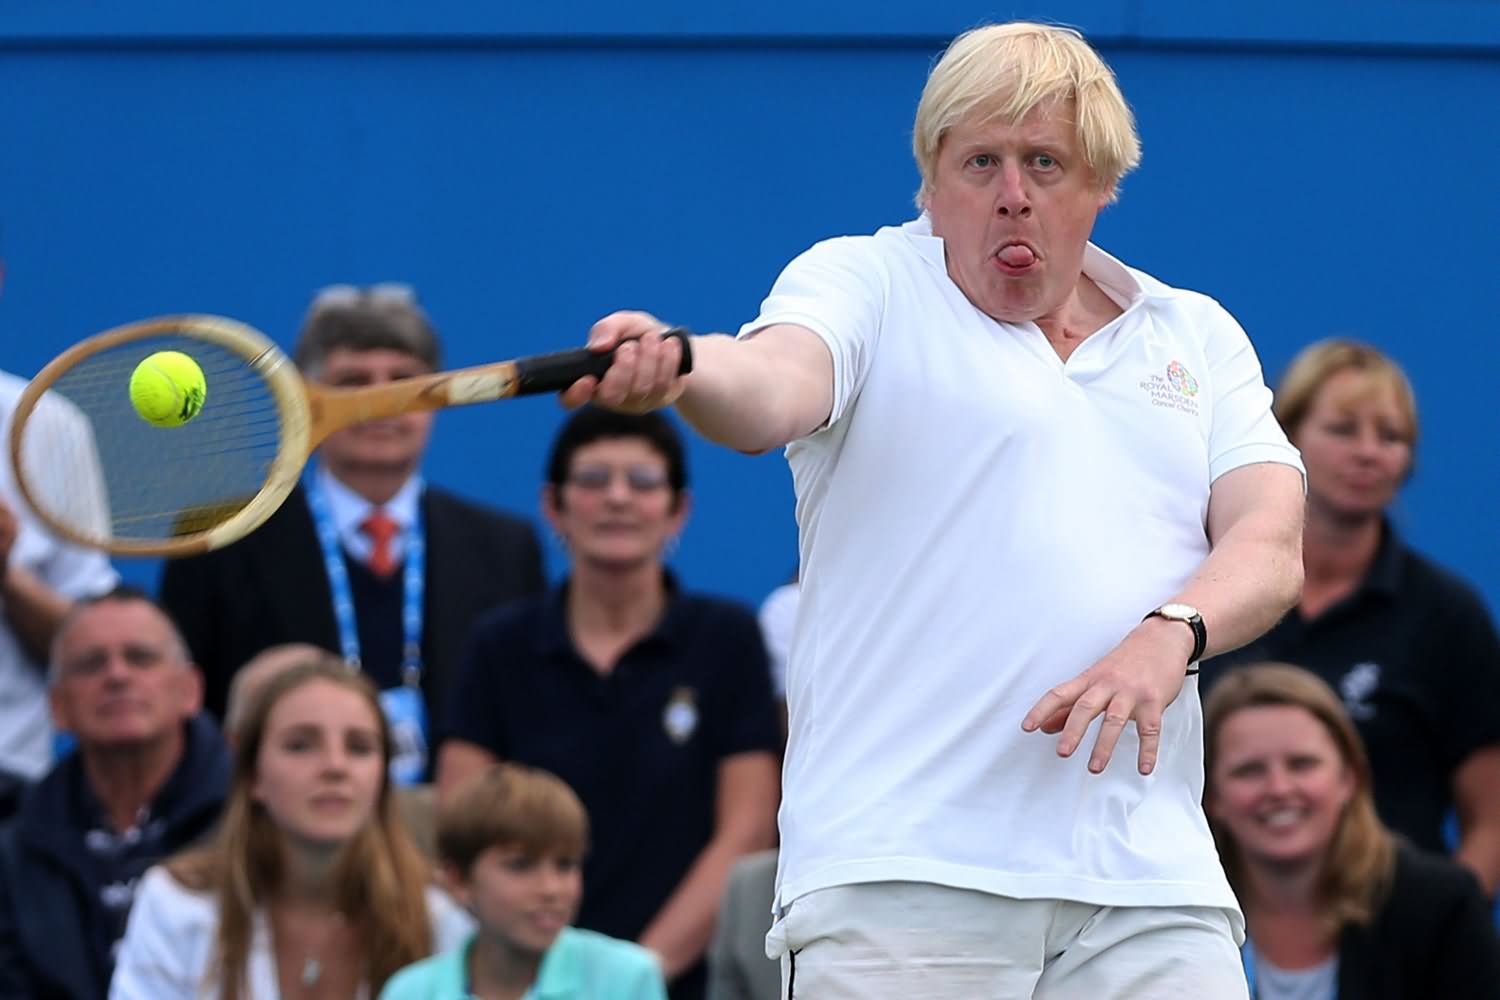 Boris Johnson Playing Tennis And Making Funny Face